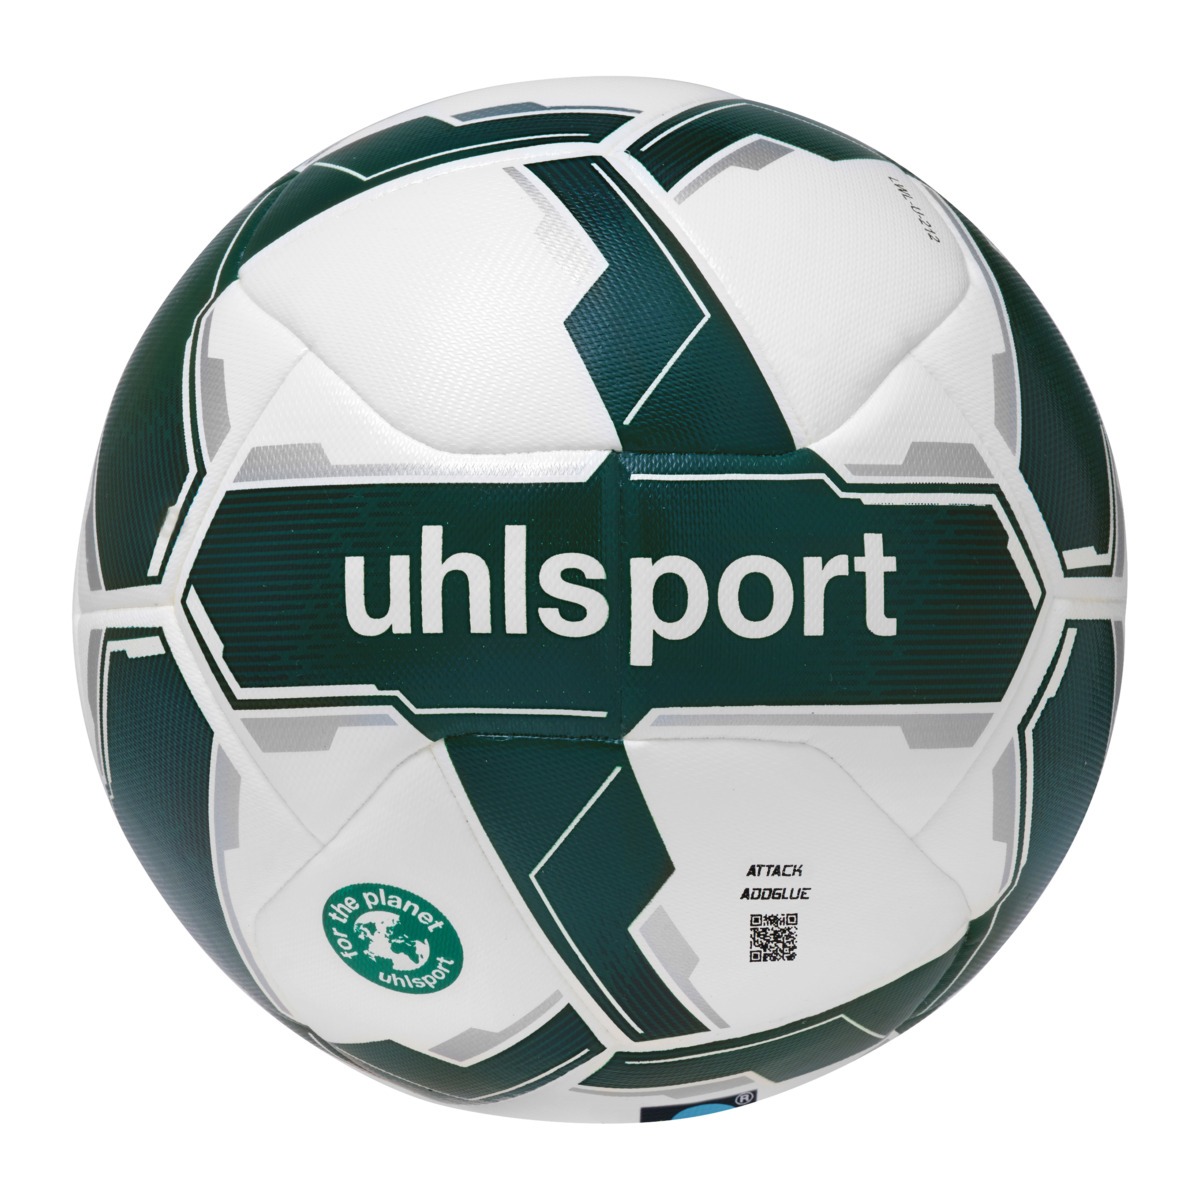 BALLON DE FOOTBALL ATTACK ADDGLUE FOR THE PLANET - UHLSPORT